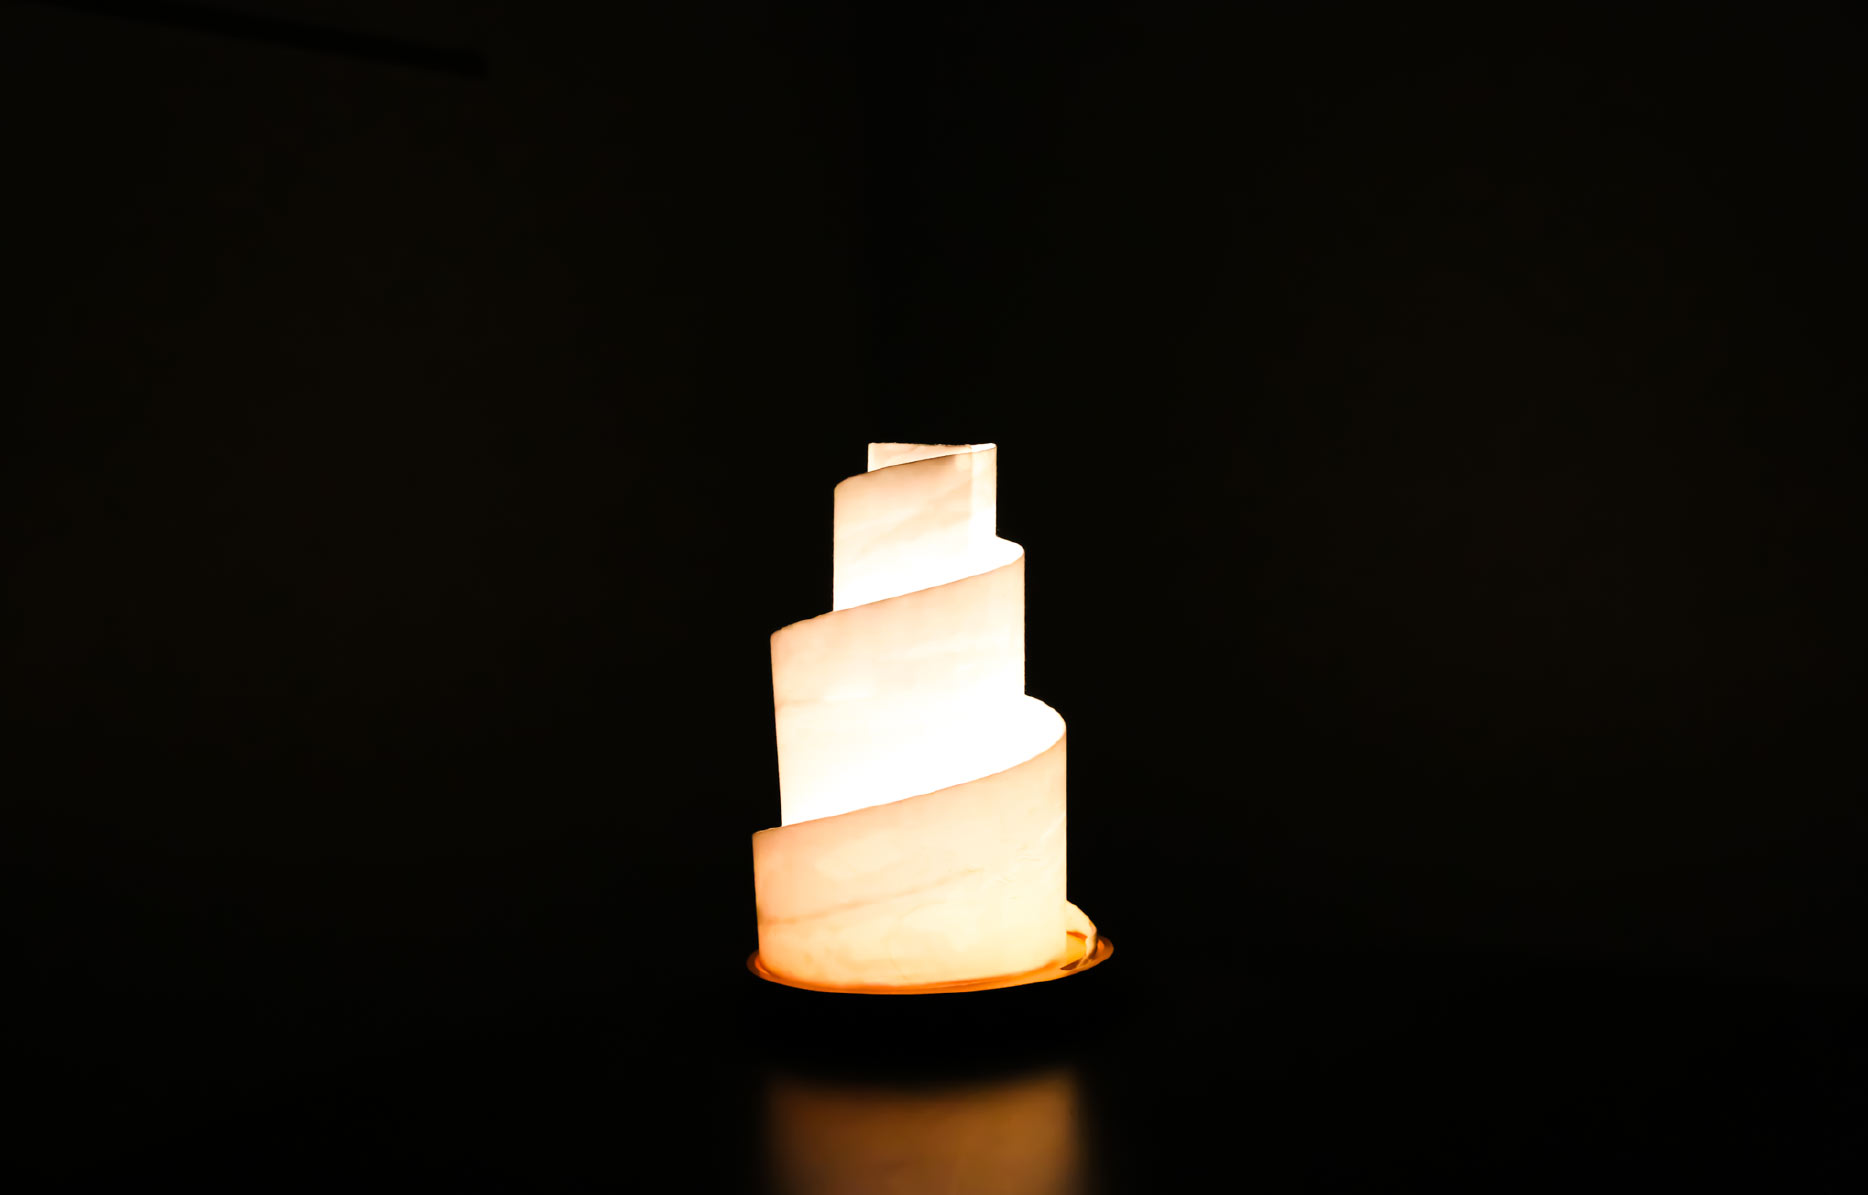 lamp looks like wedding cake